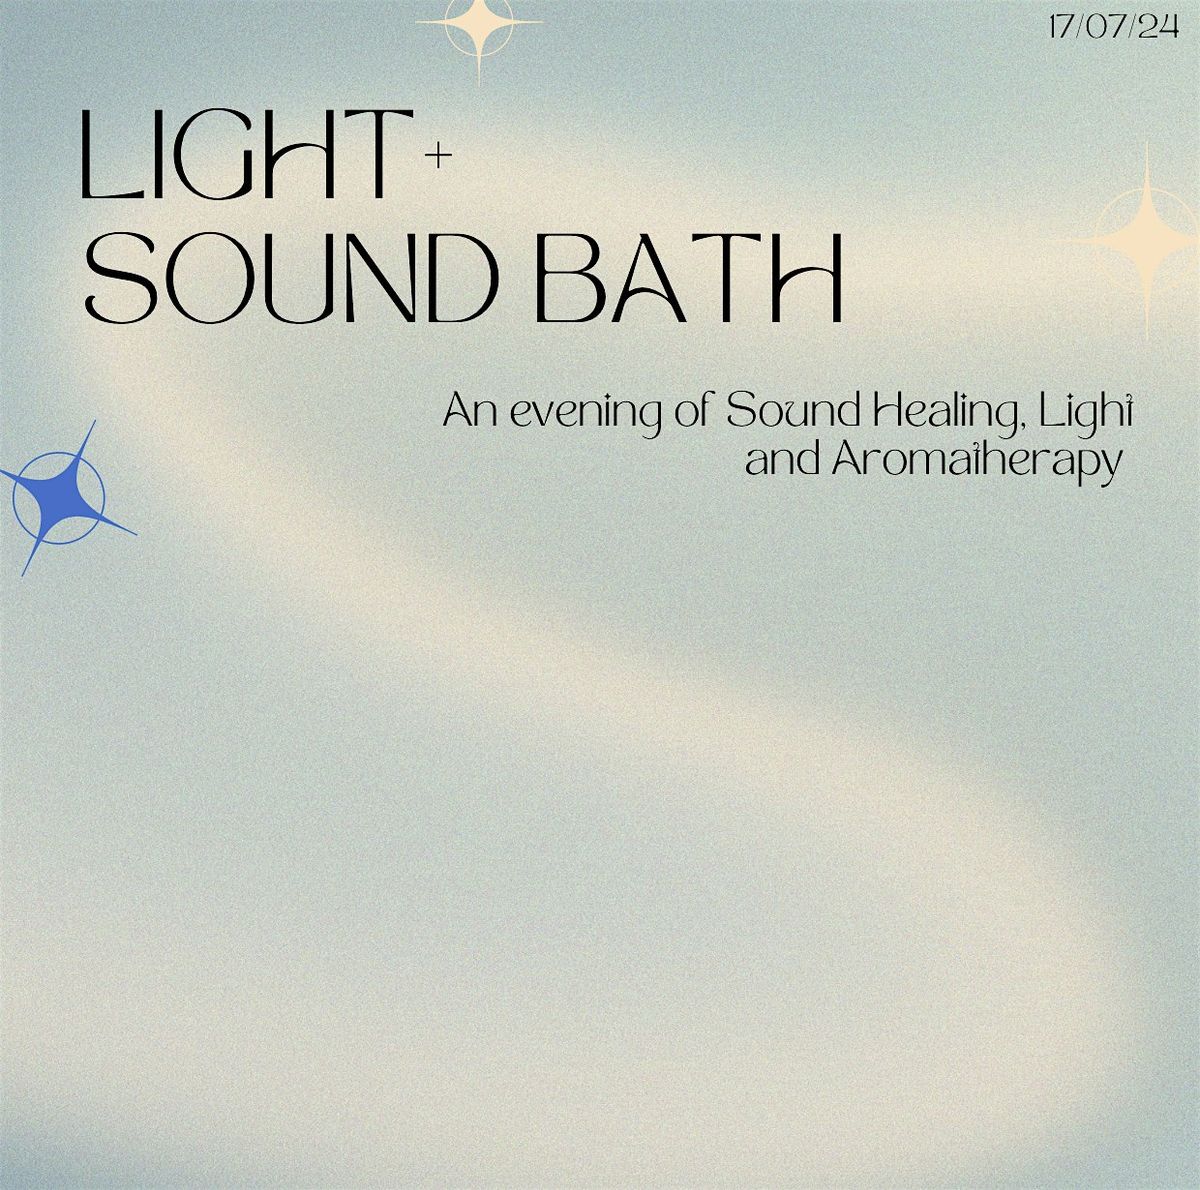 LIGHT + SOUND BATH